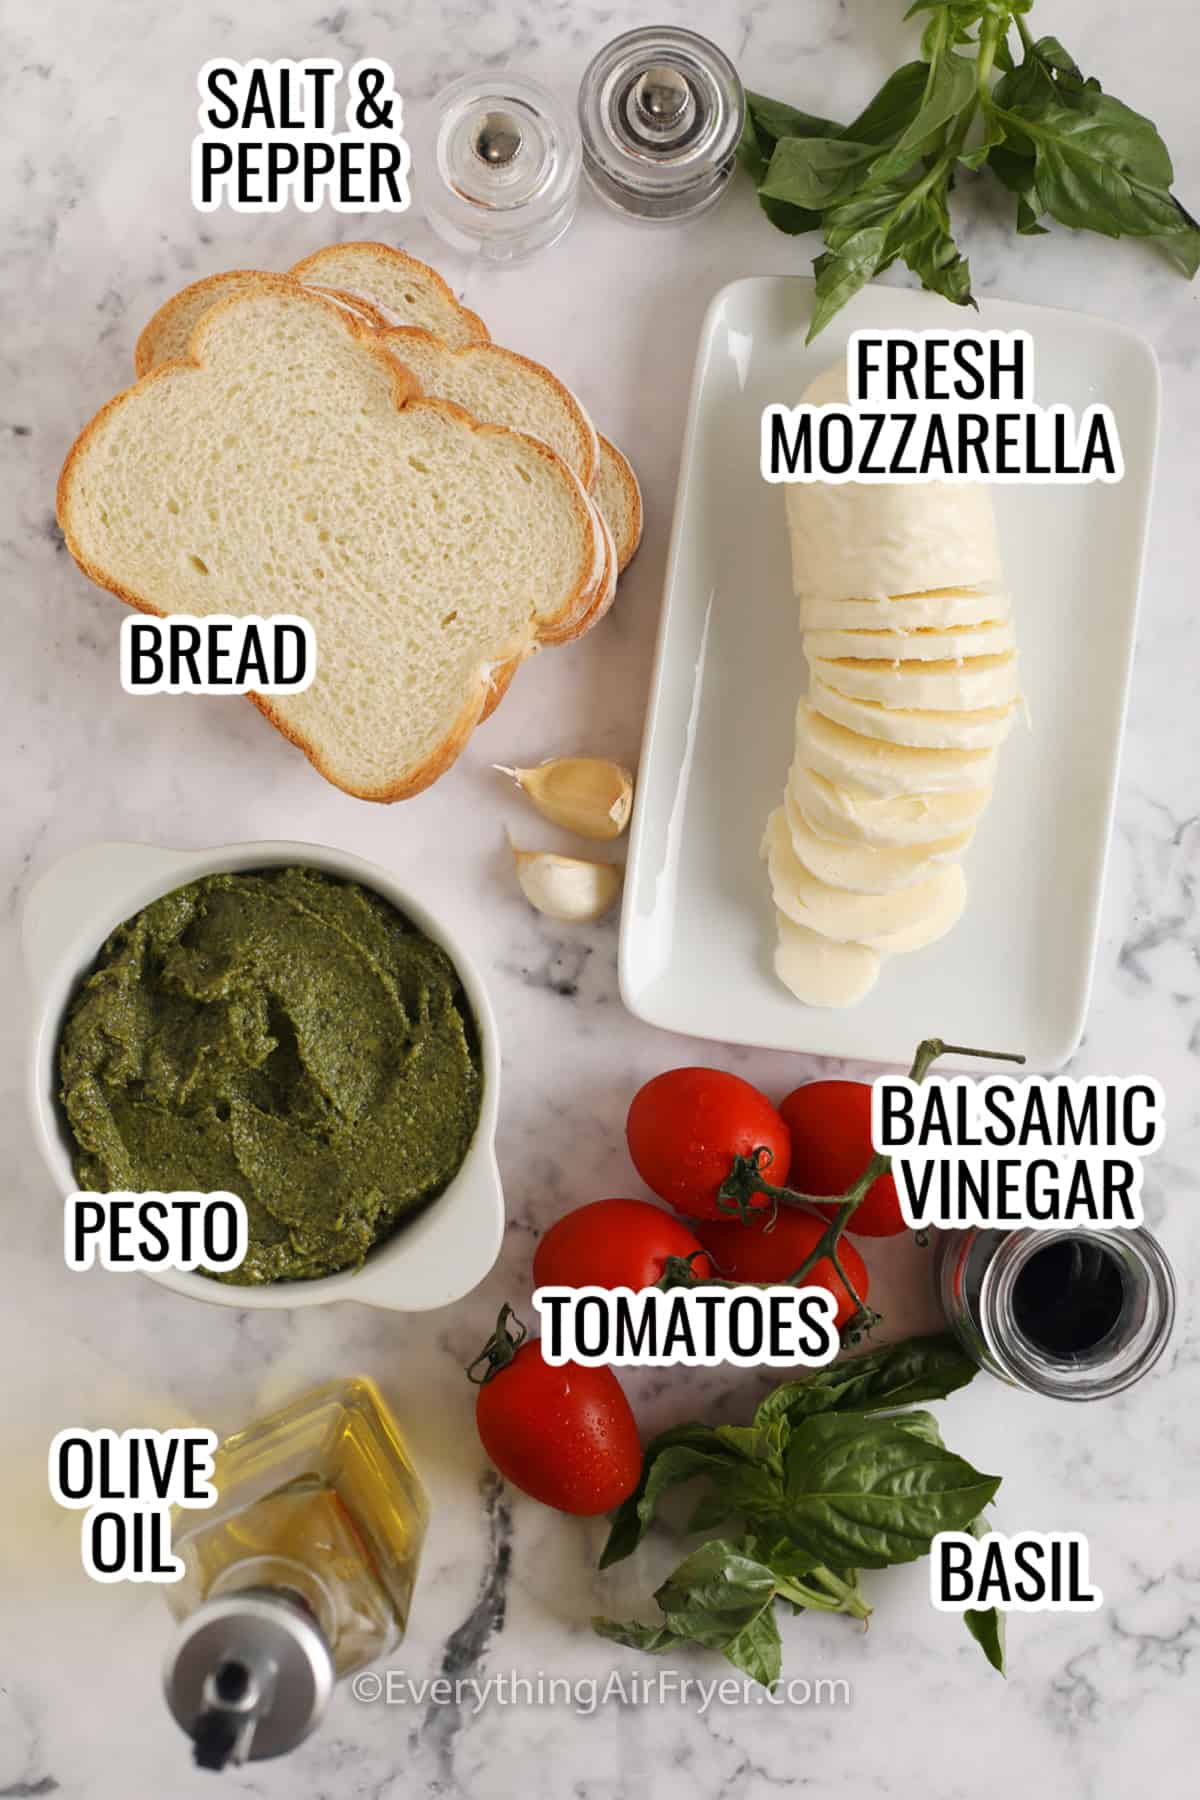 Bread, Pesto, olive oil, tomatoes, basil, balsamic vinegar, fresh mozzarella to make Caprese Grilled Cheese